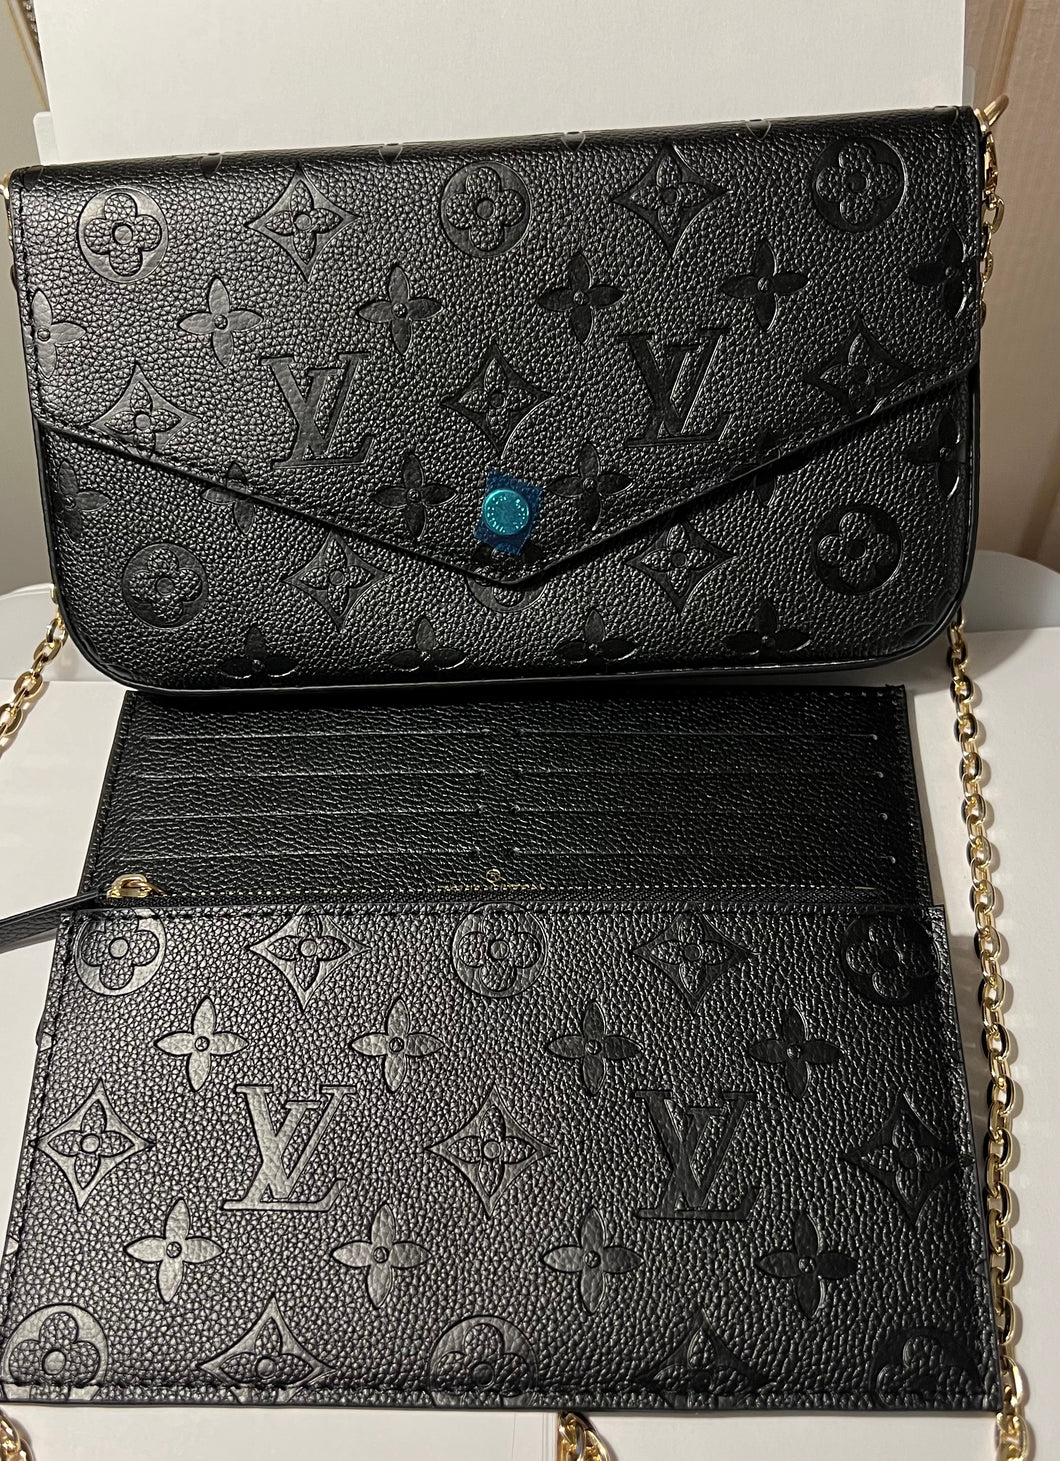 fashion handbag shoulder bag crossbody purse 3pc set